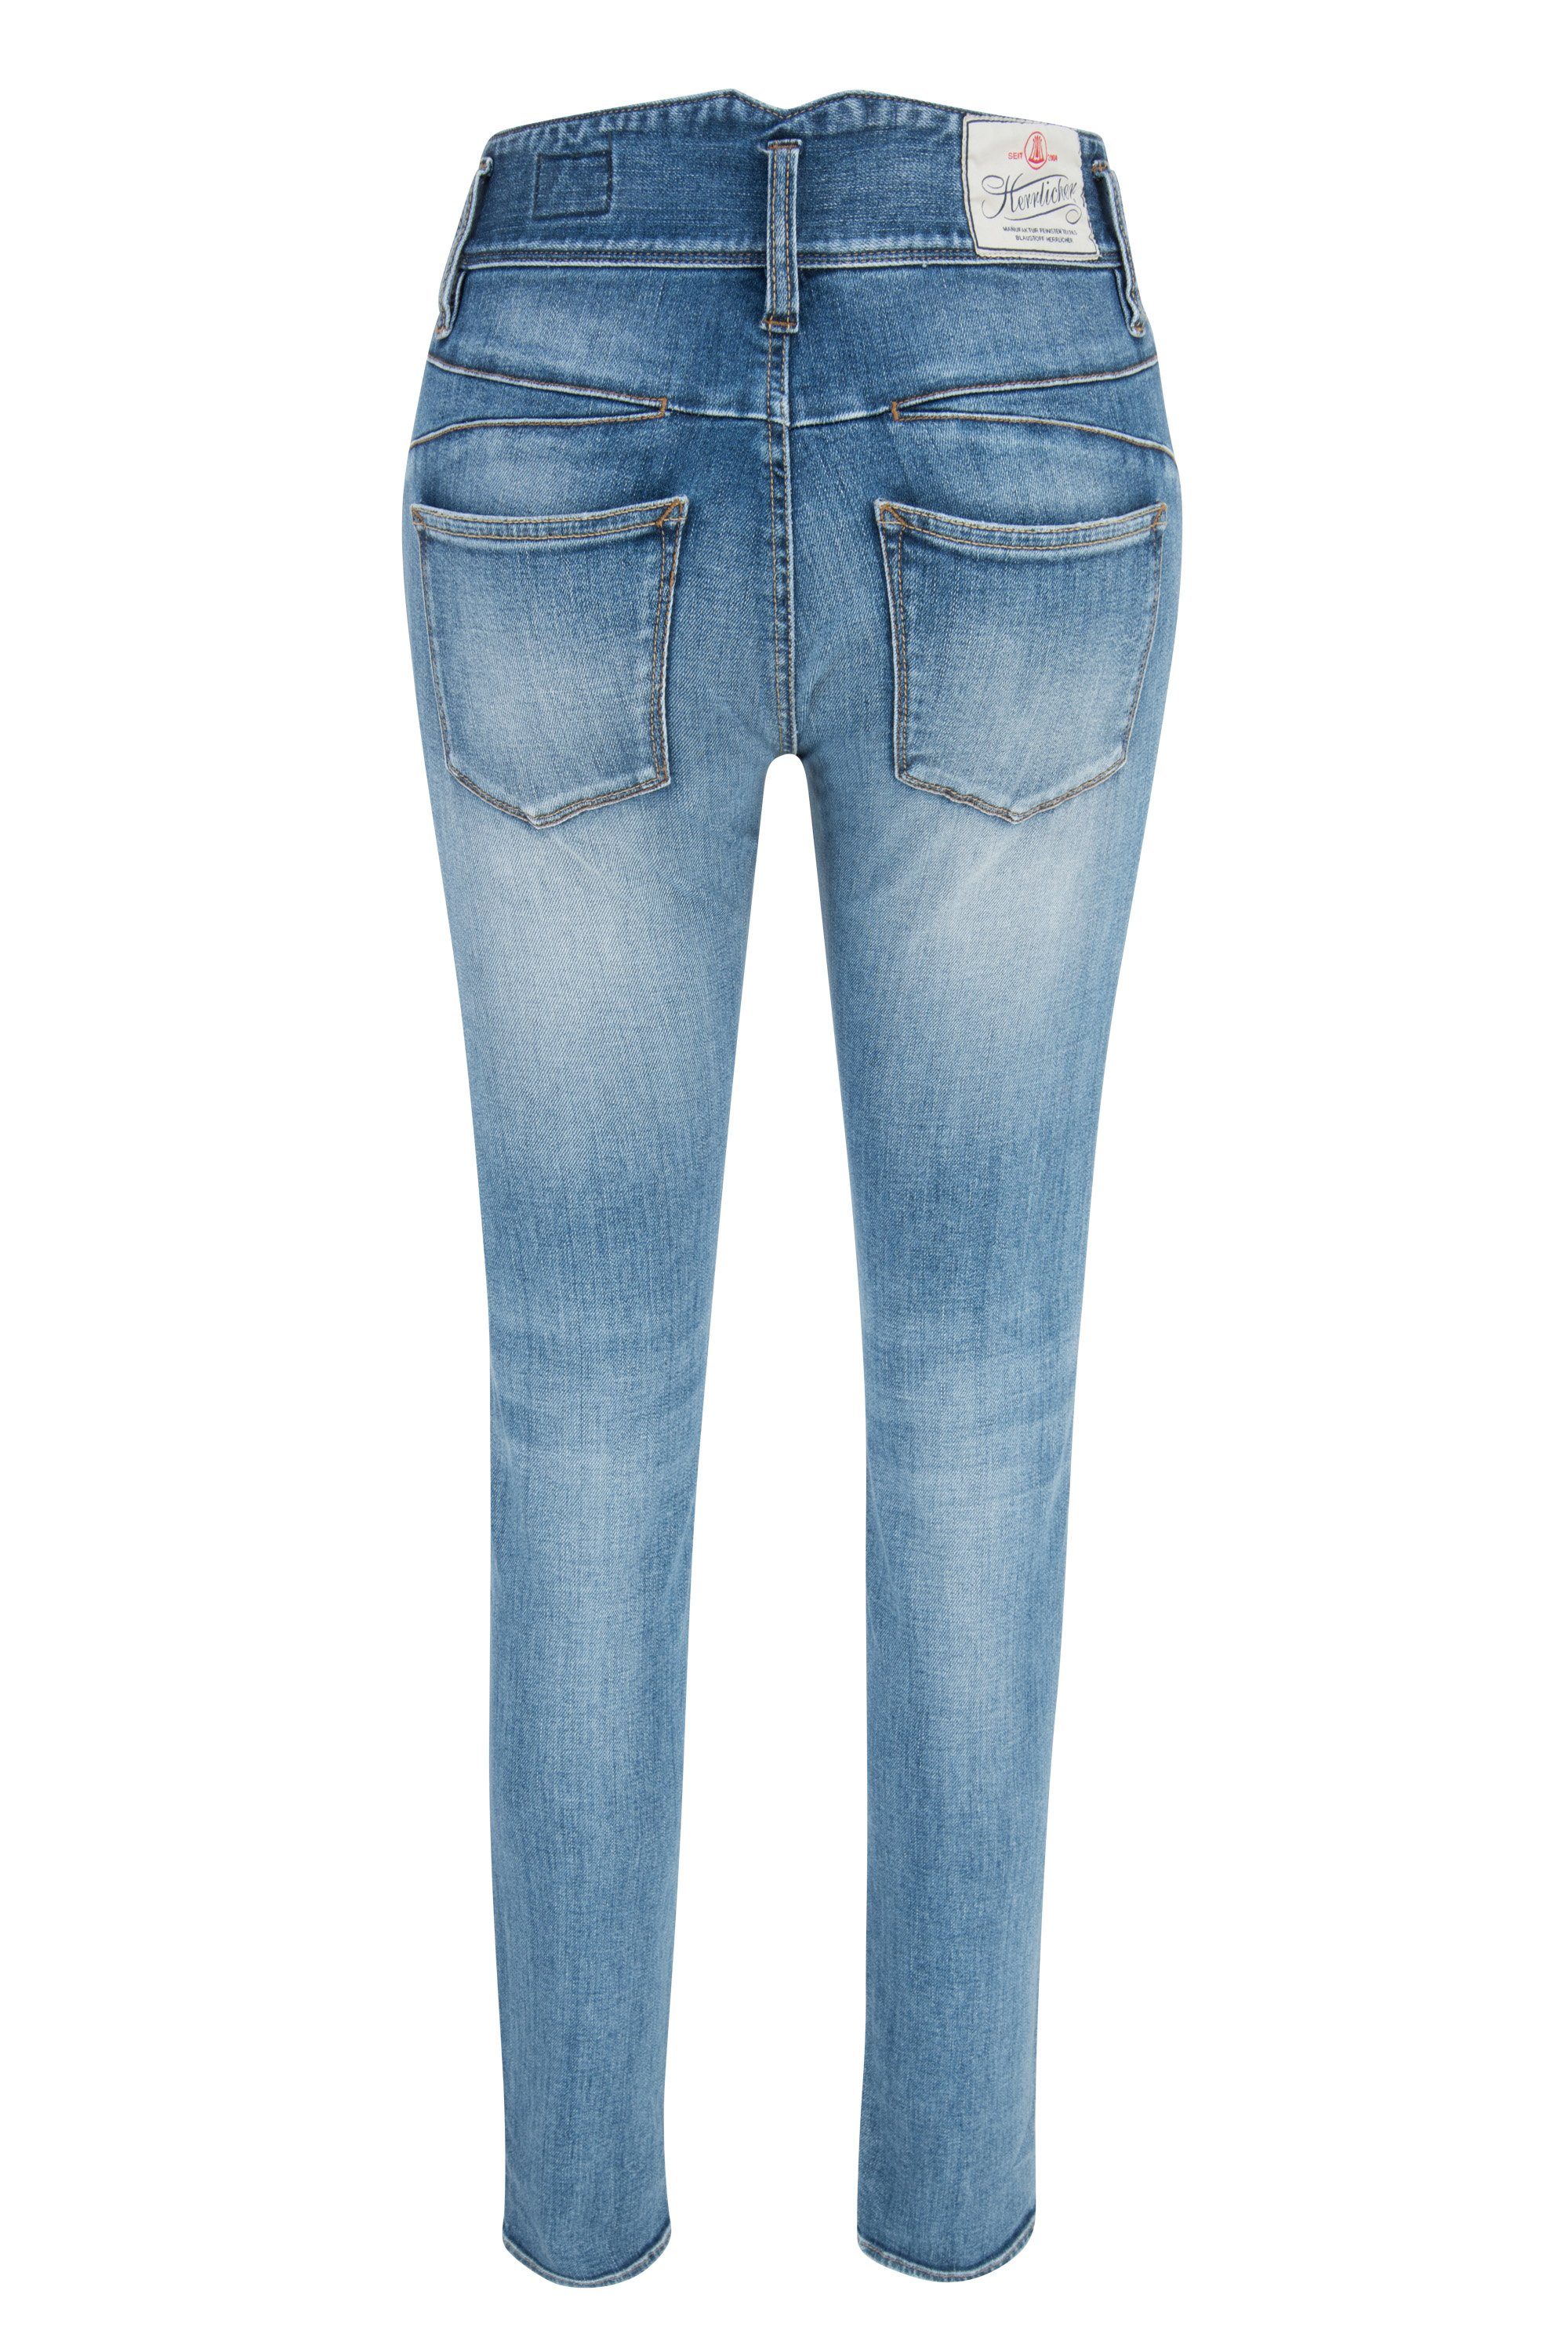 HERRLICHER Slim Stretch-Jeans PEARL Herrlicher blue Organic 5692-OD100-666 Denim faded